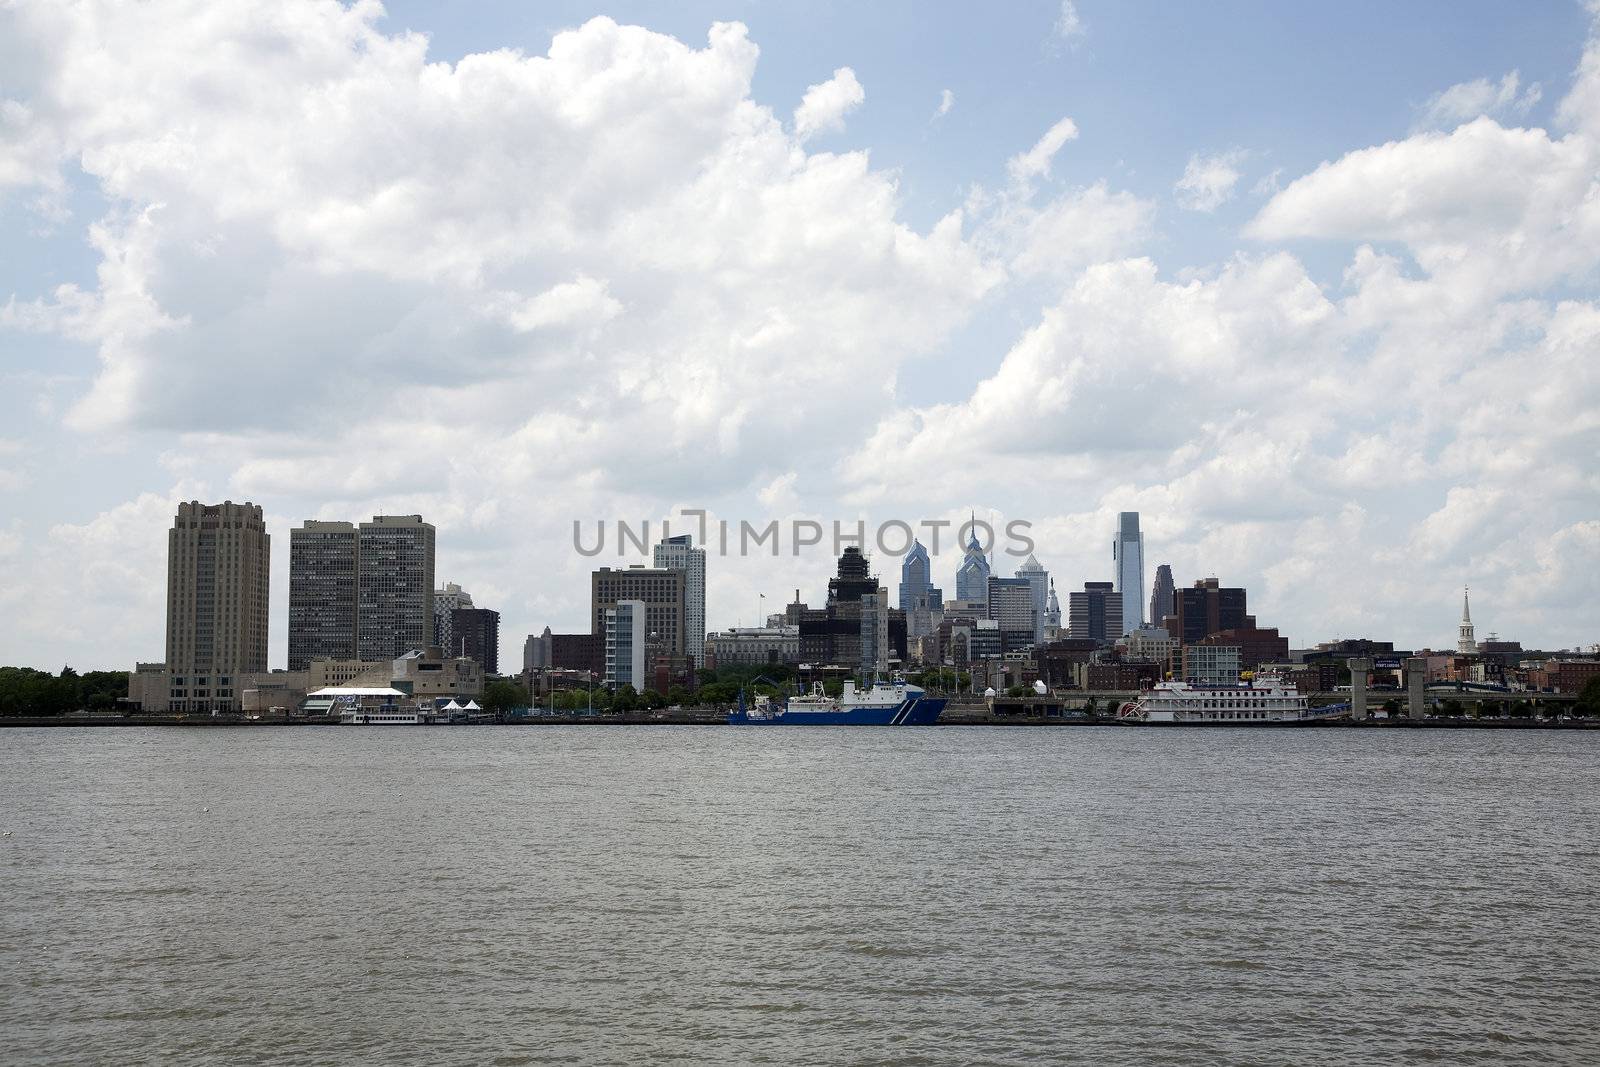 View of the Philadelphia skyline with some landmarks.